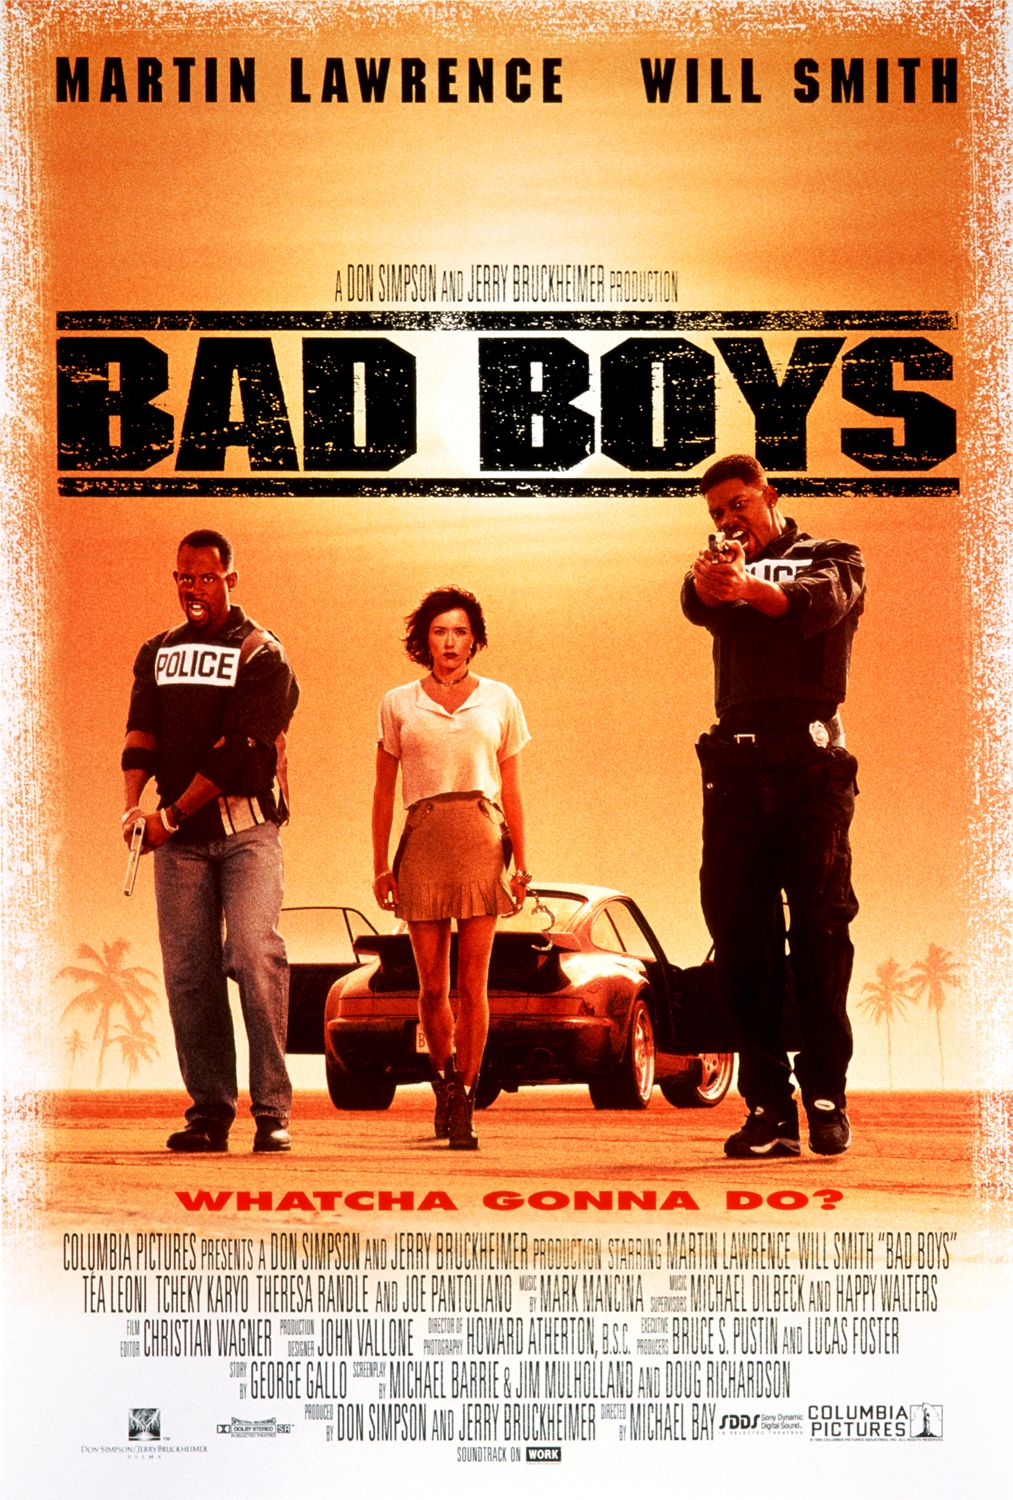 Bad boys - 1995